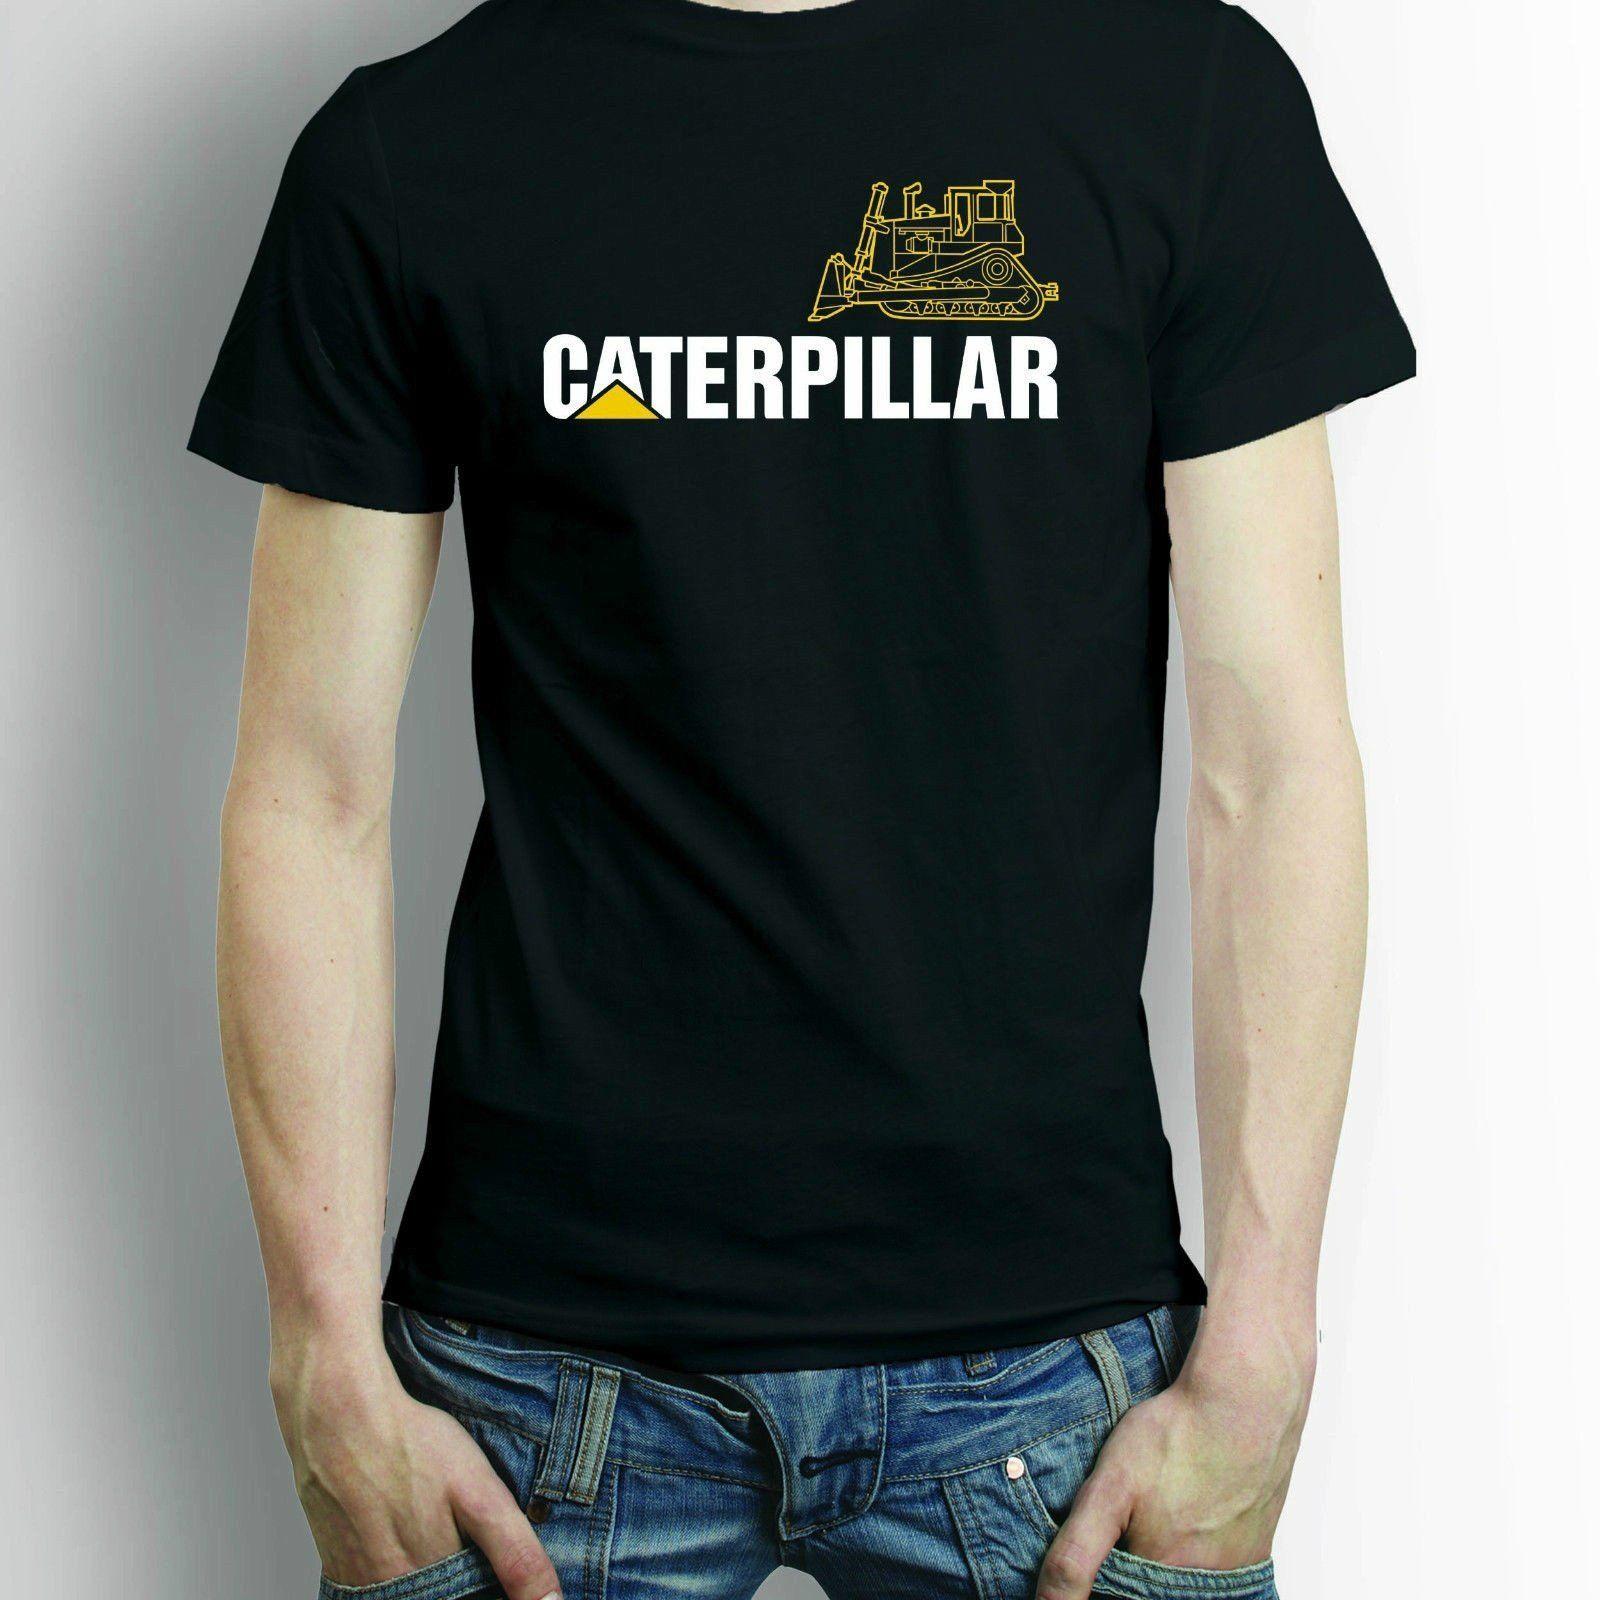 Black Caterpillar Logo - Man New Cat Caterpillar Logo Black Cotton T Shirt Tops - YongFish